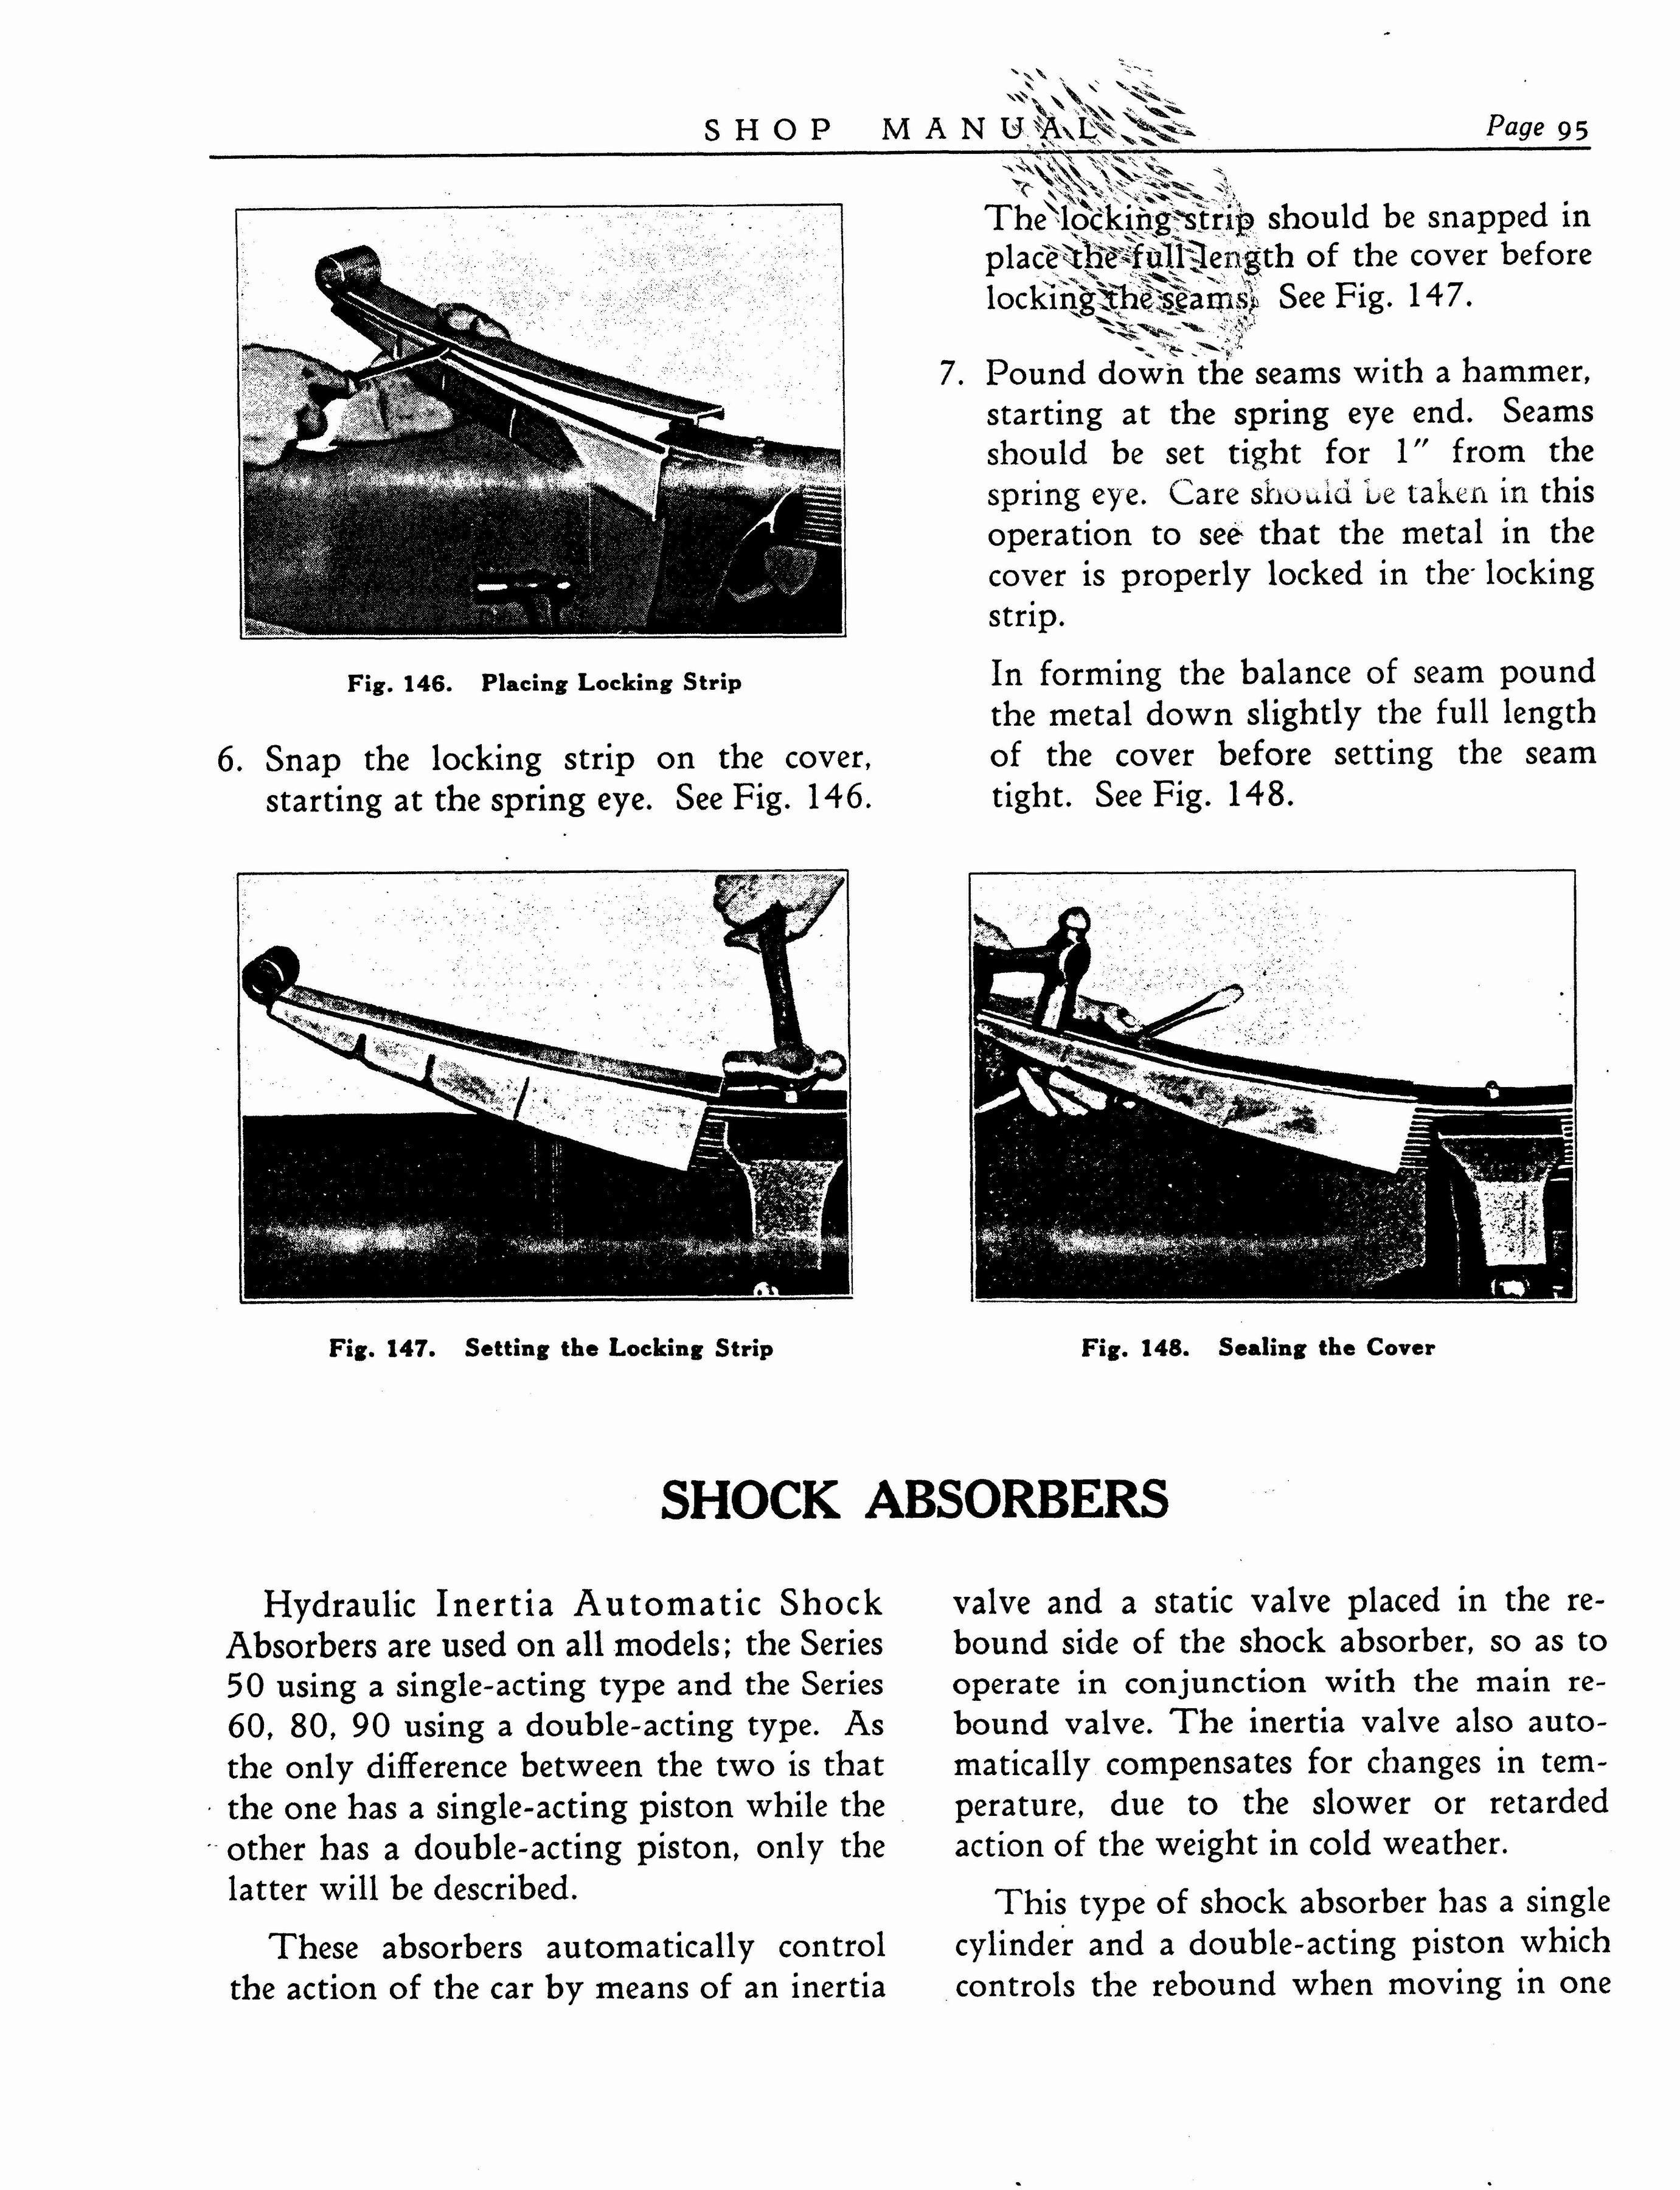 n_1933 Buick Shop Manual_Page_096.jpg